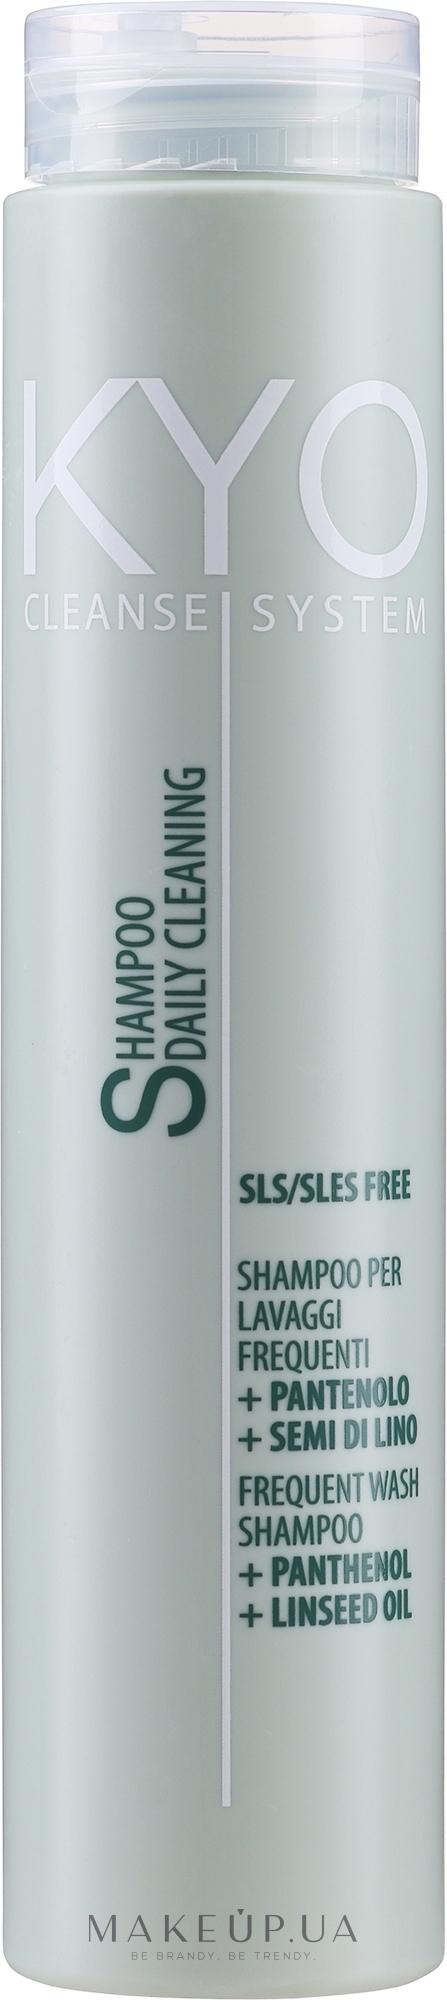 Шампунь для частого использования - Kyo Cleanse System Frequent Wash Shampoo — фото 250ml